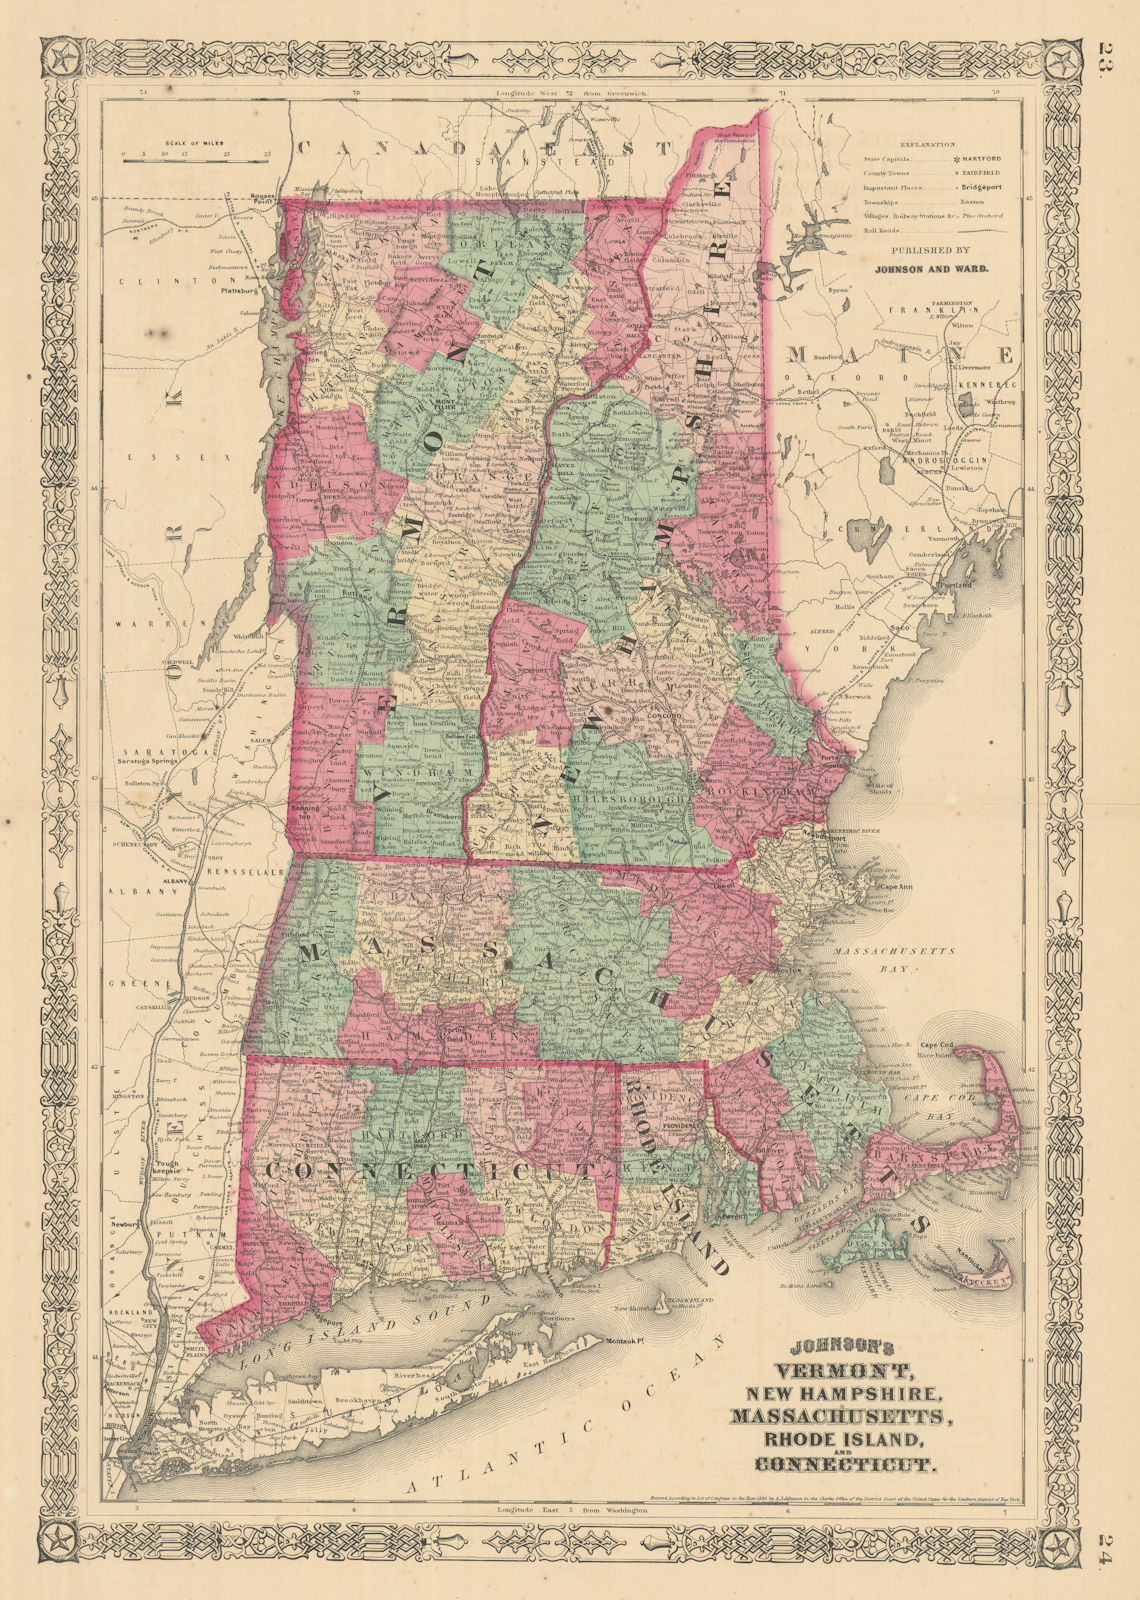 Johnson's Vermont New Hampshire Massachusetts Rhode Island Connecticut 1866 map